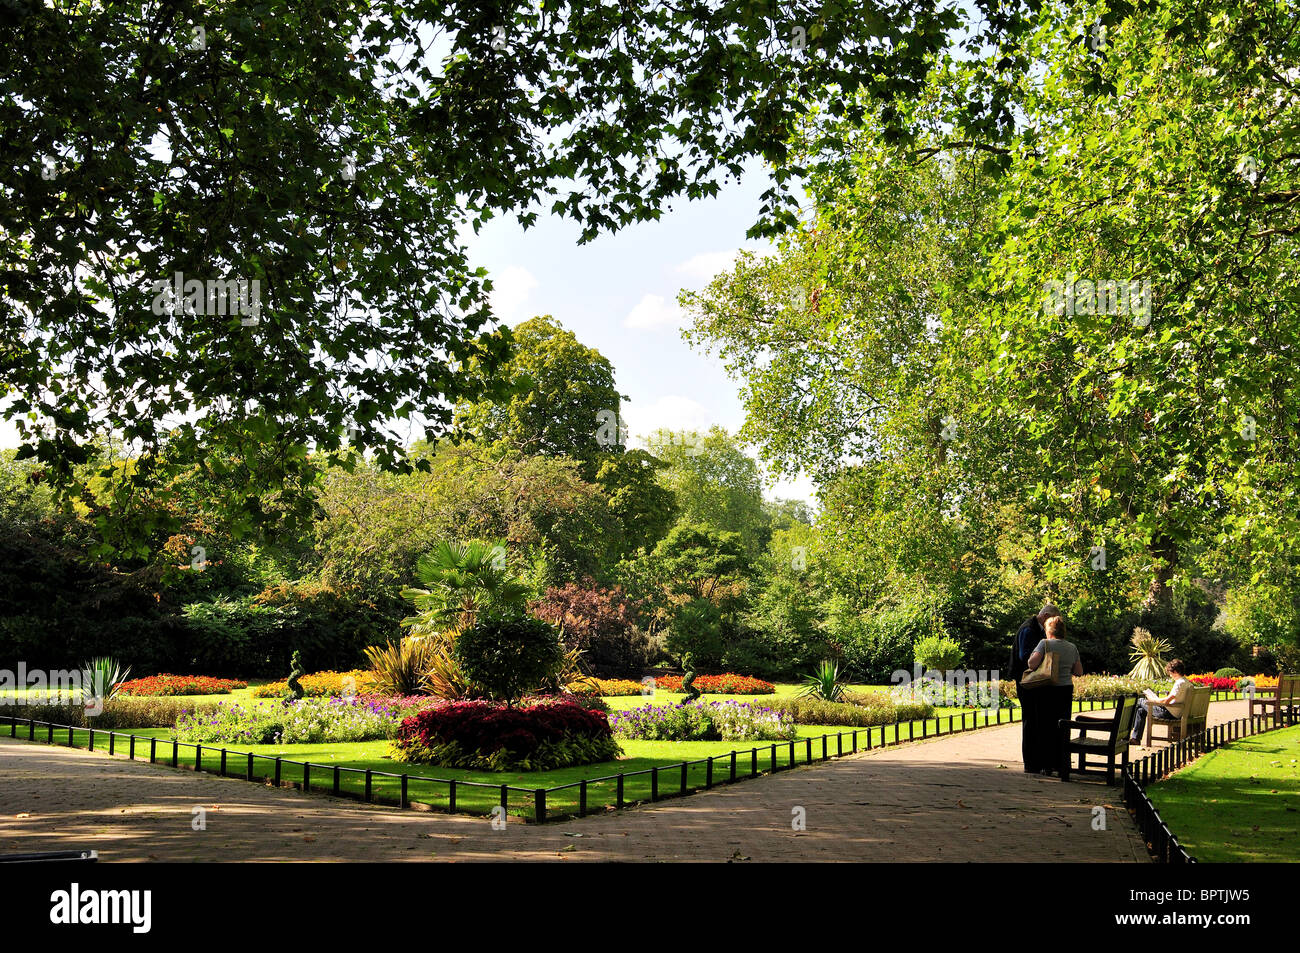 Queen's Park, London Borough of Brent, Greater London, England, Regno Unito Foto Stock